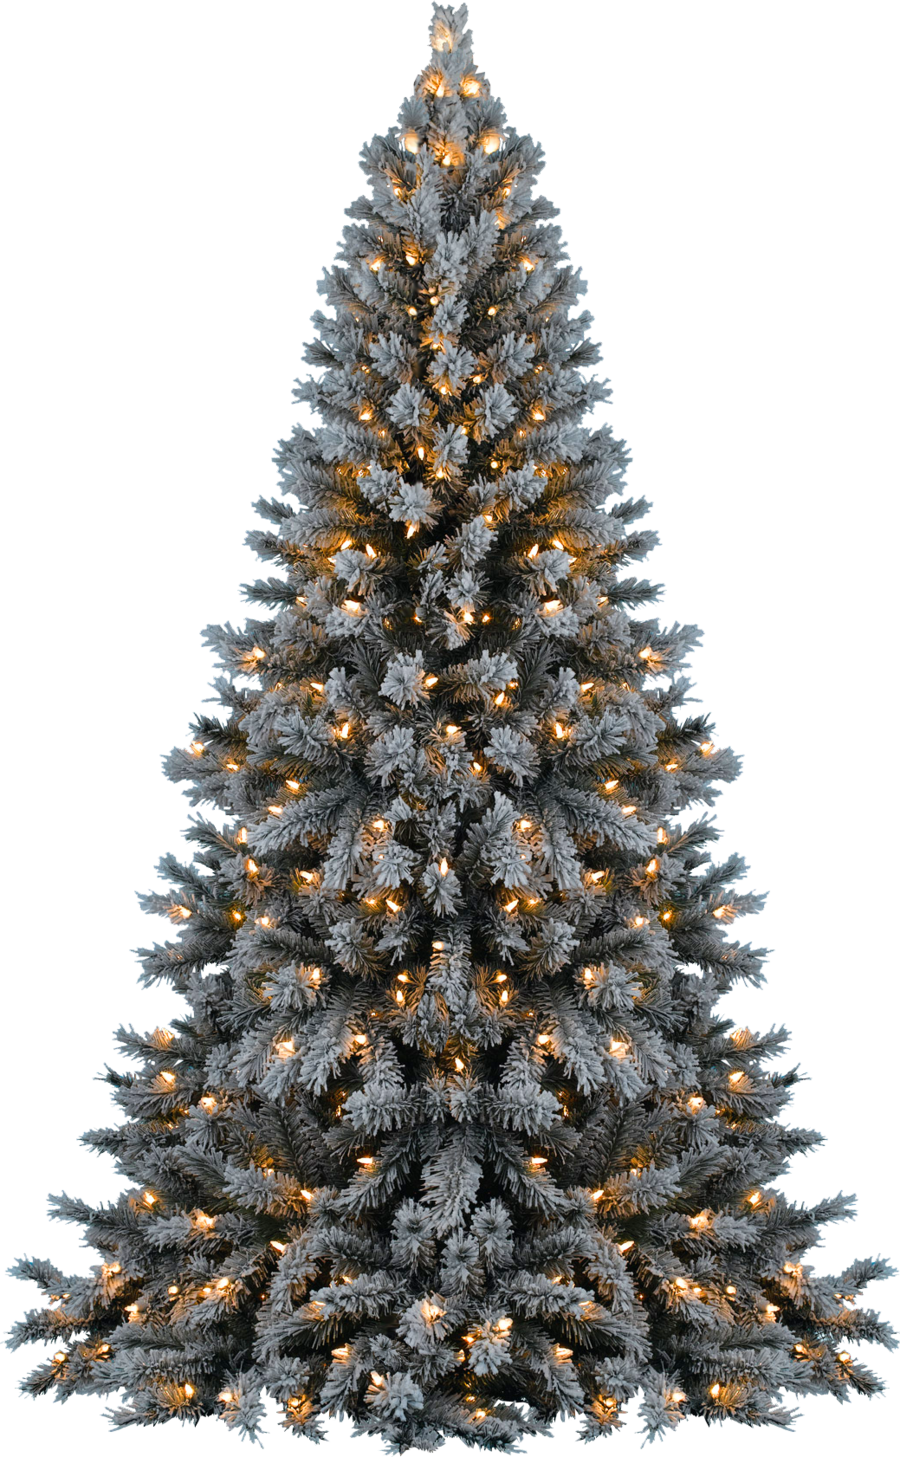 Christmas Tree Transparent PNG Image